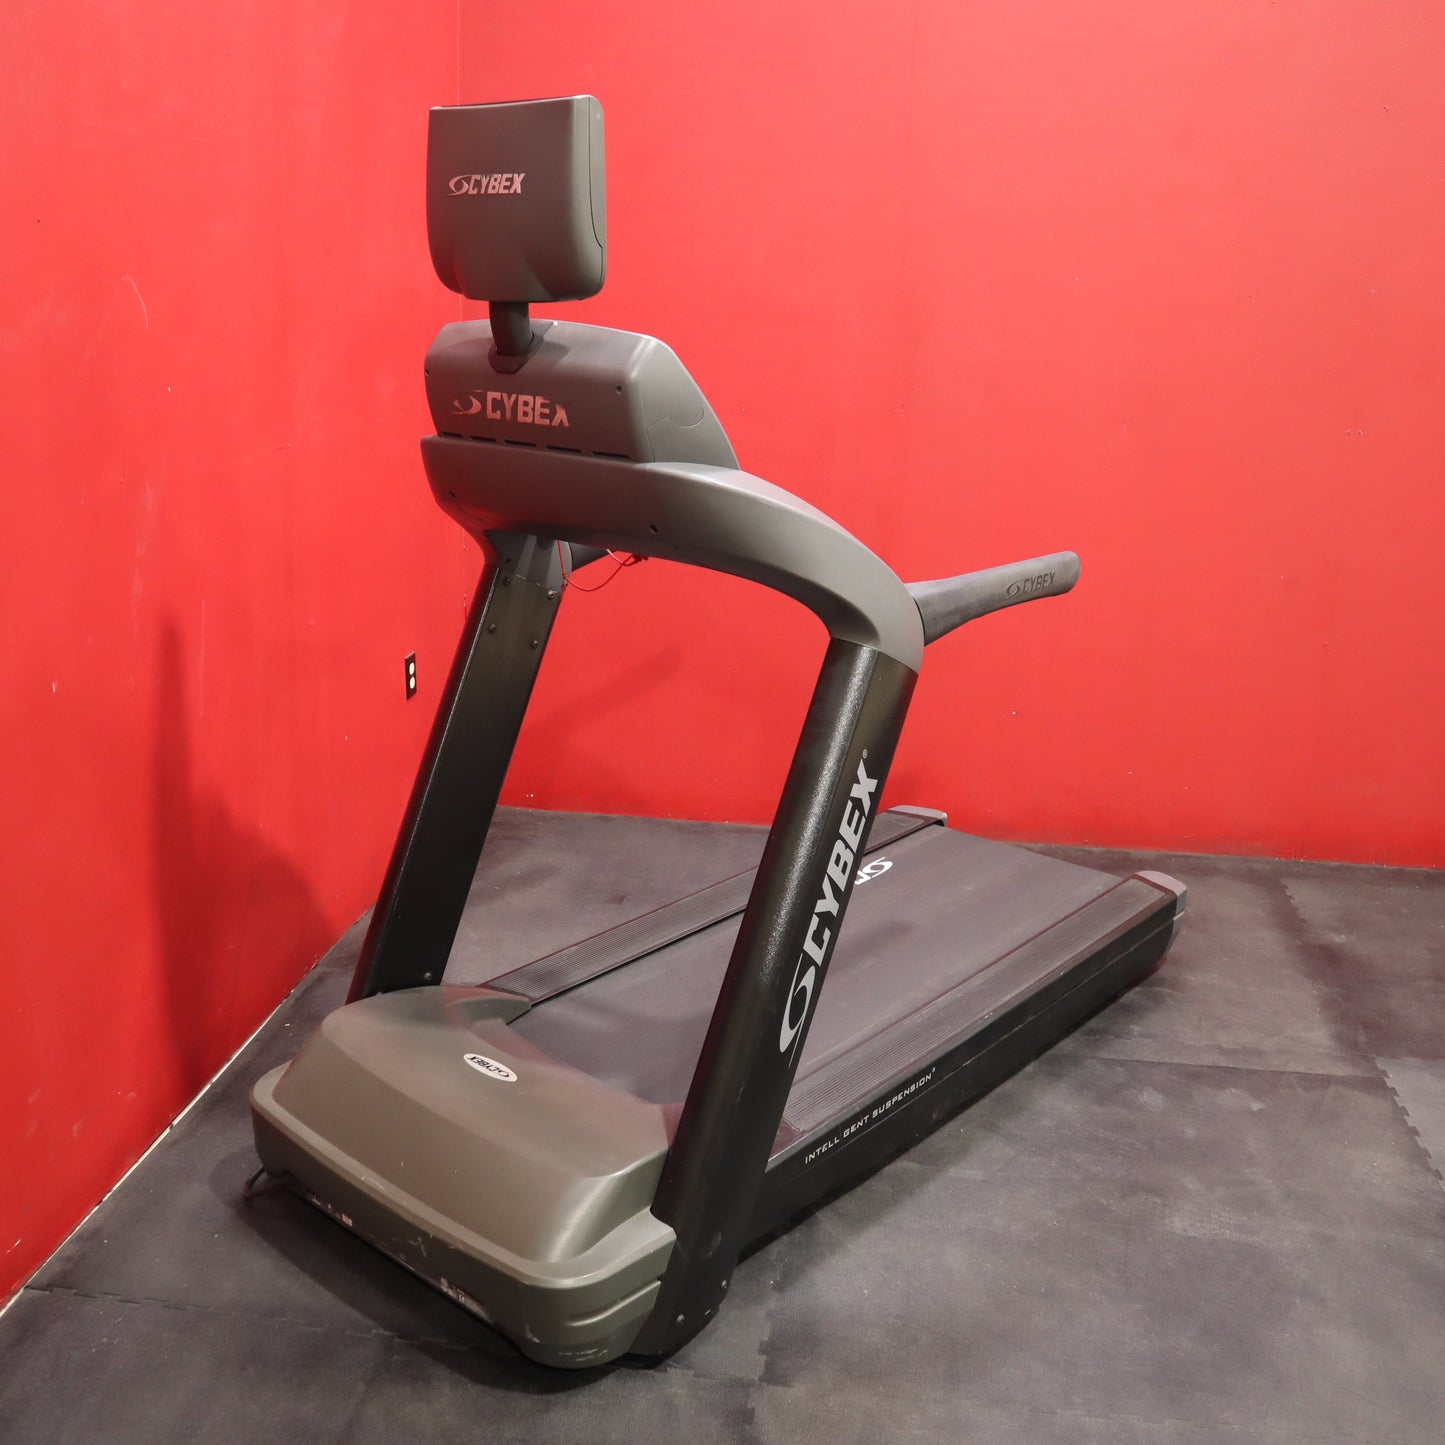 Cybex 625T Treadmill (Used)